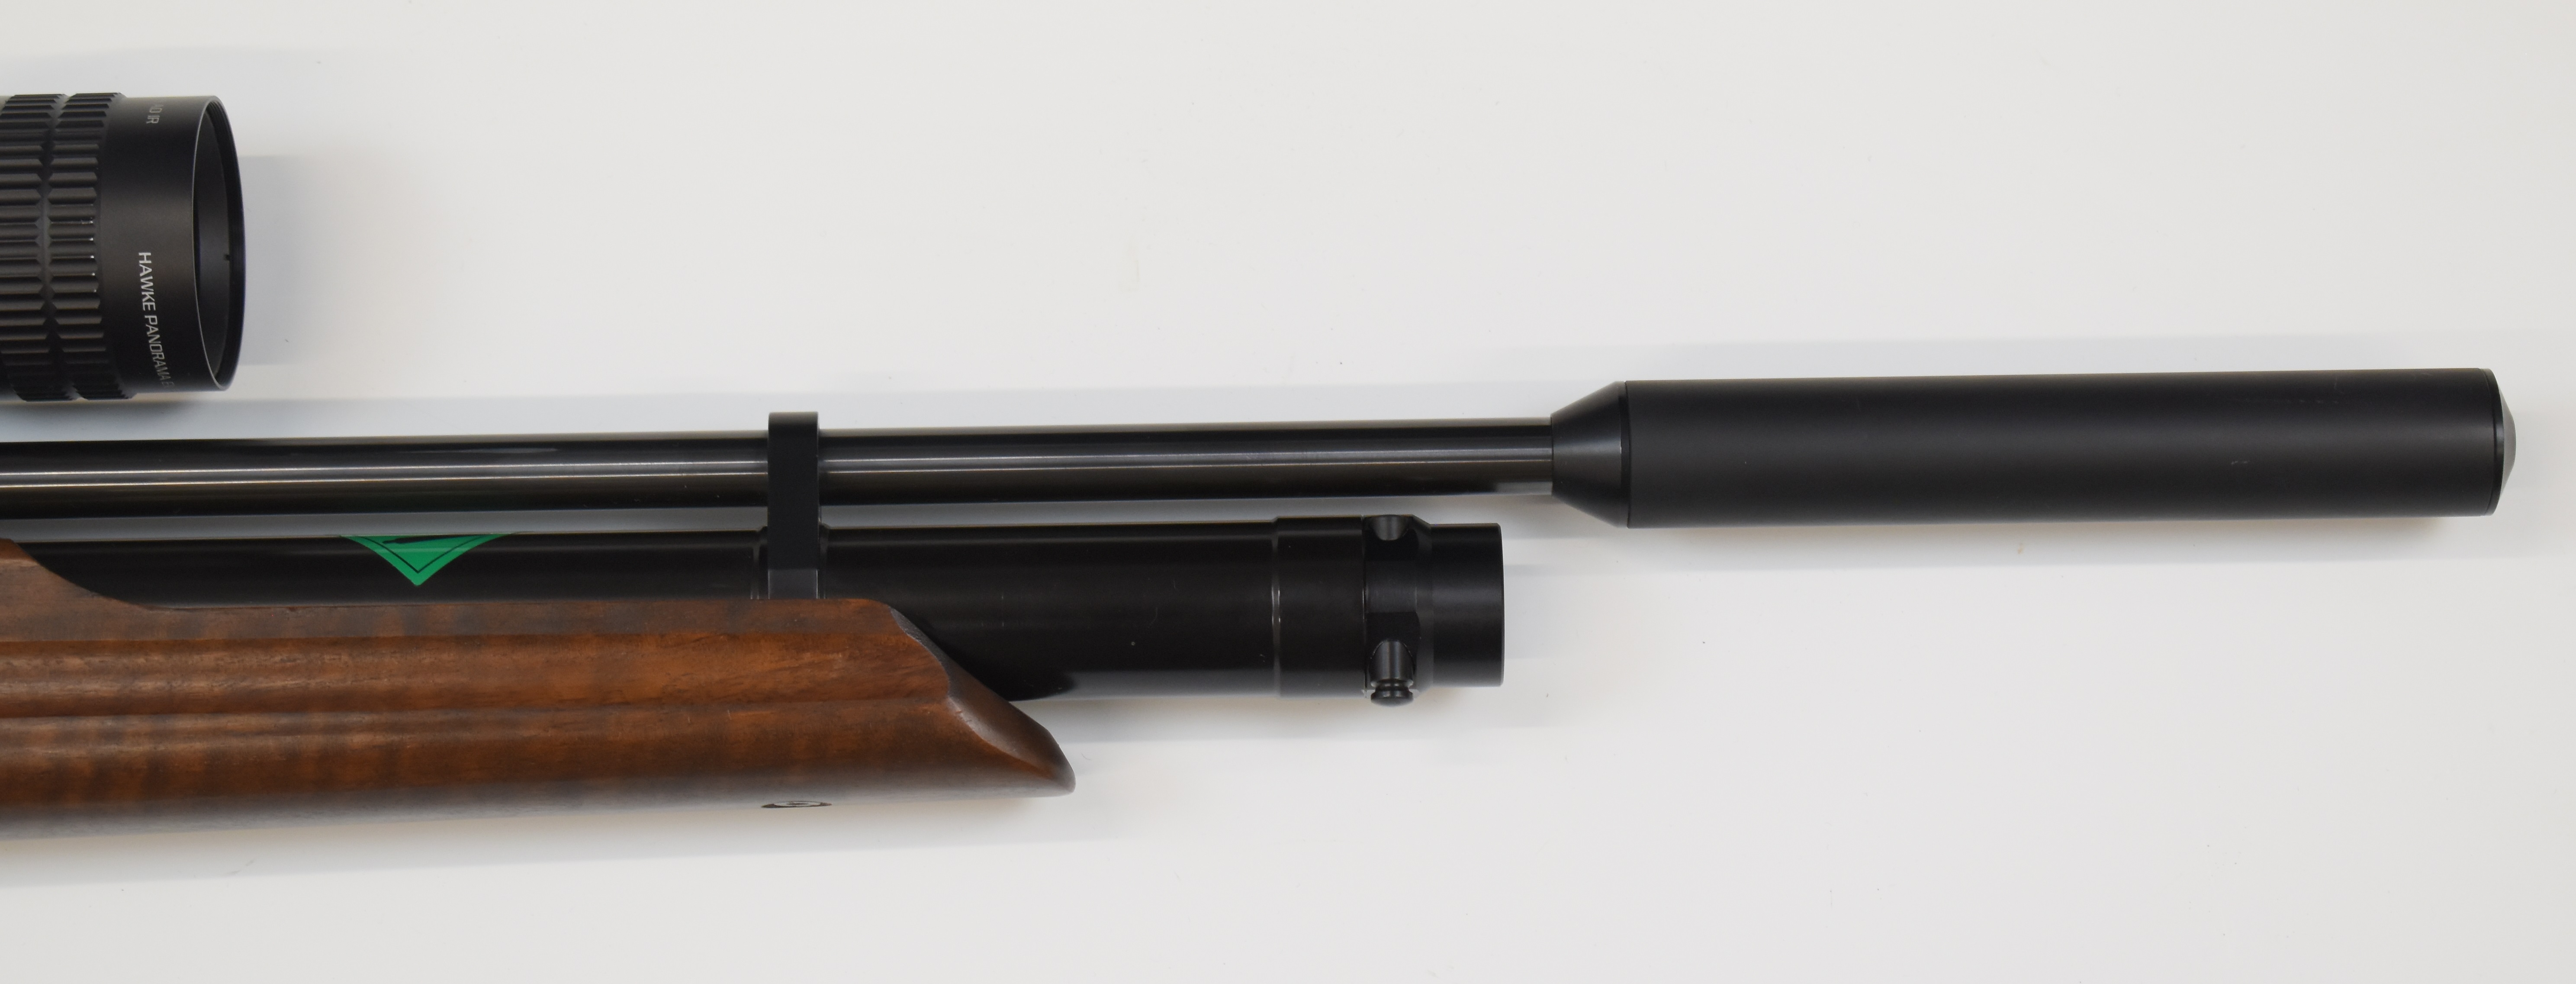 Weihrauch HW100 .177 PCP air rifle with textured semi-pistol grip, raised cheek piece, adjustable - Image 5 of 10